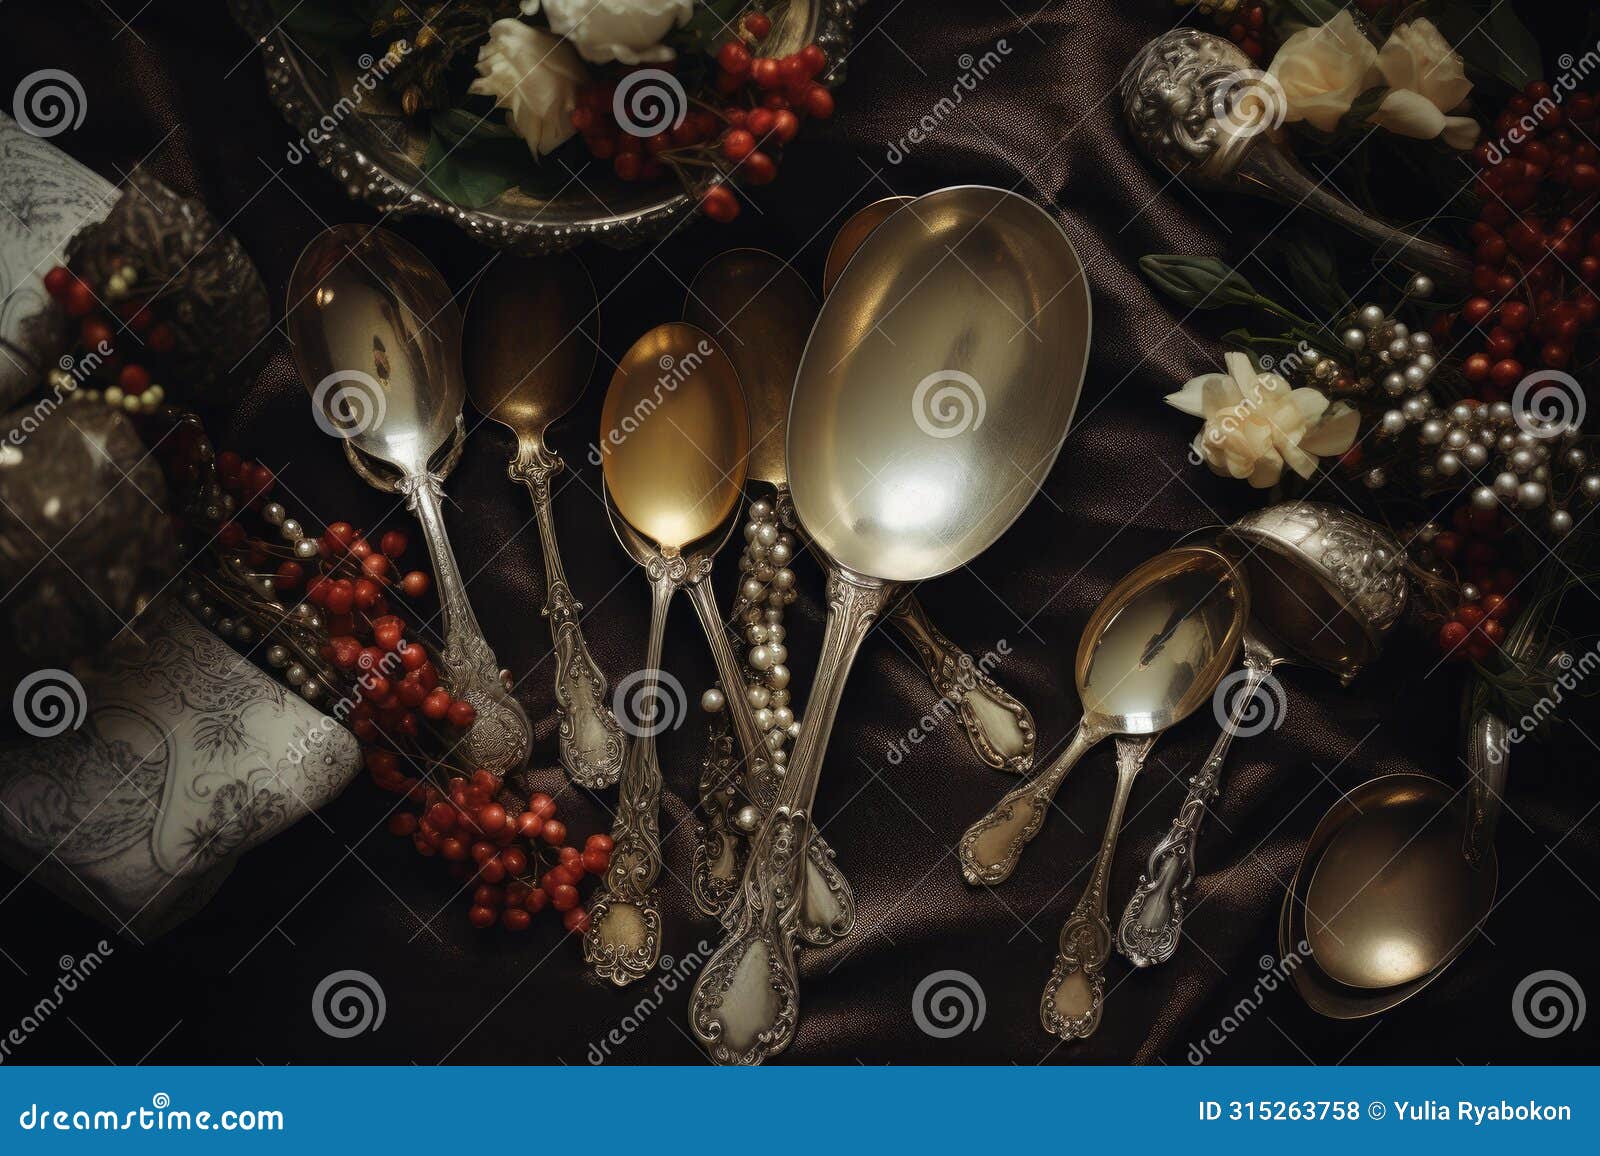 collectible vintage silver antique spoon cutlery. generate ai